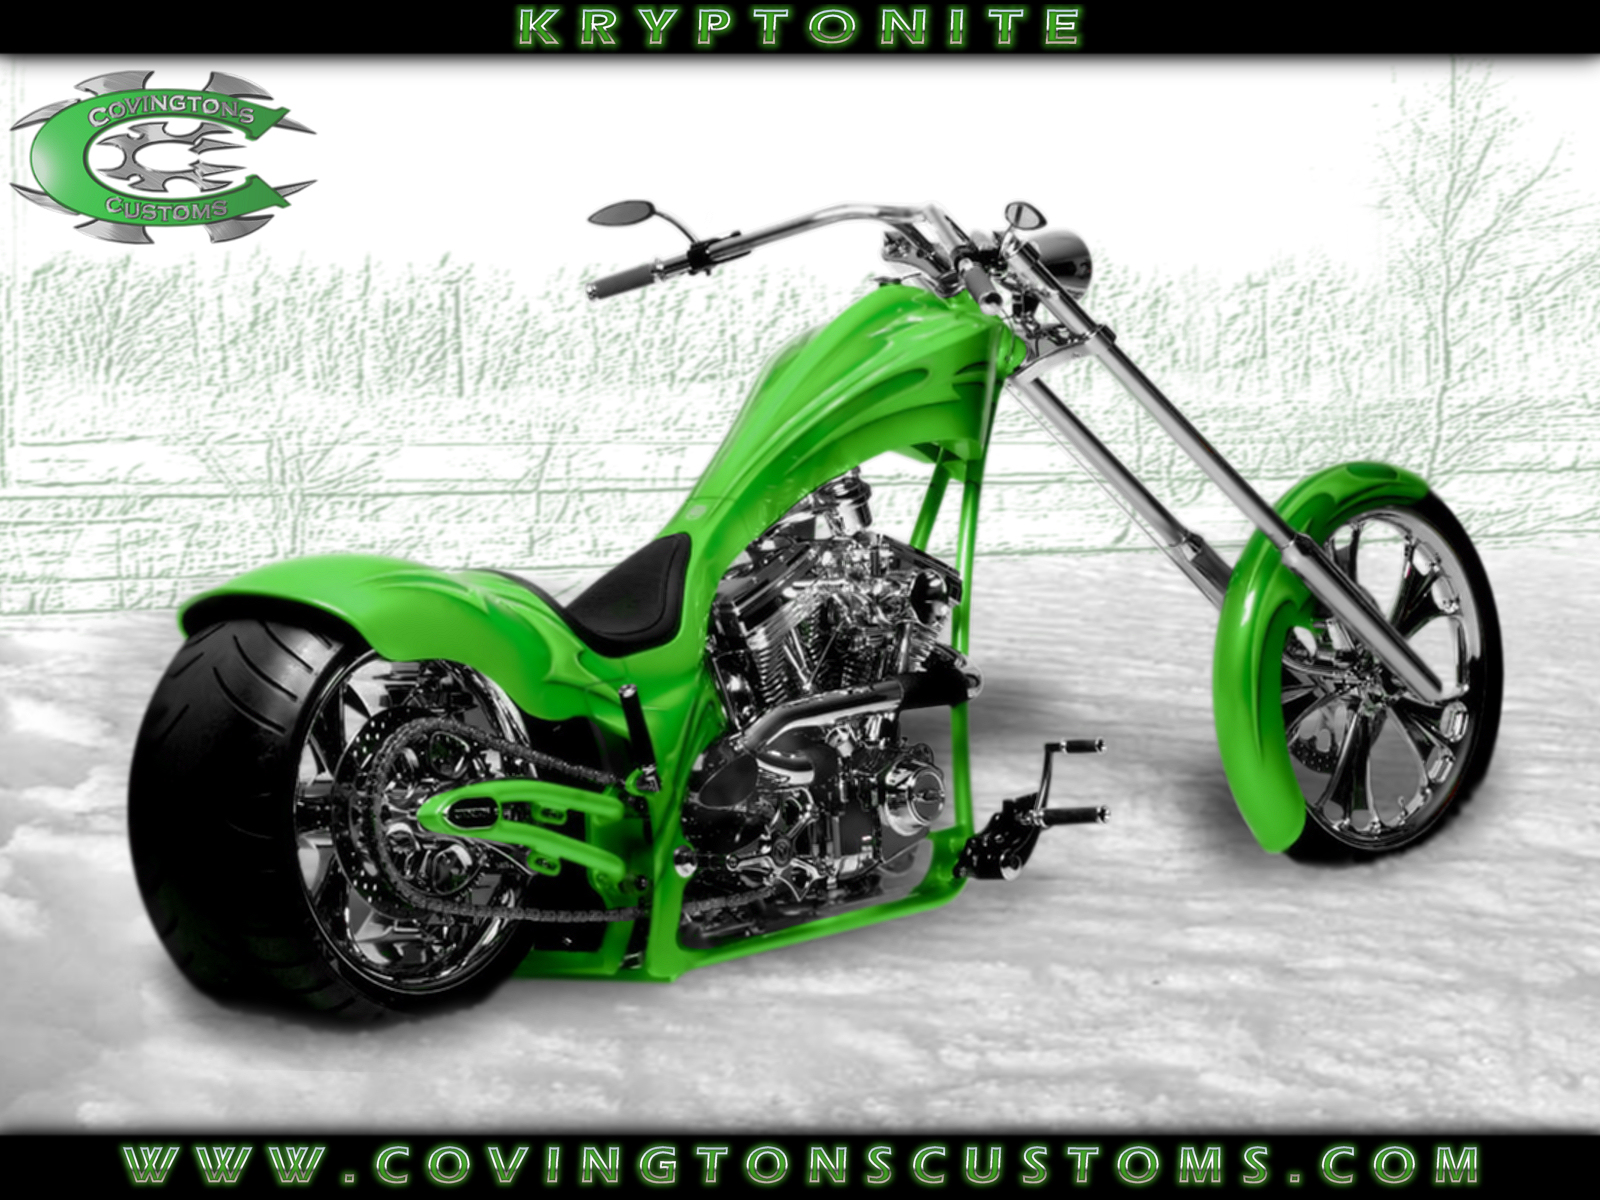 Covingtons Custom Motorcycle WallPaper 33jpg